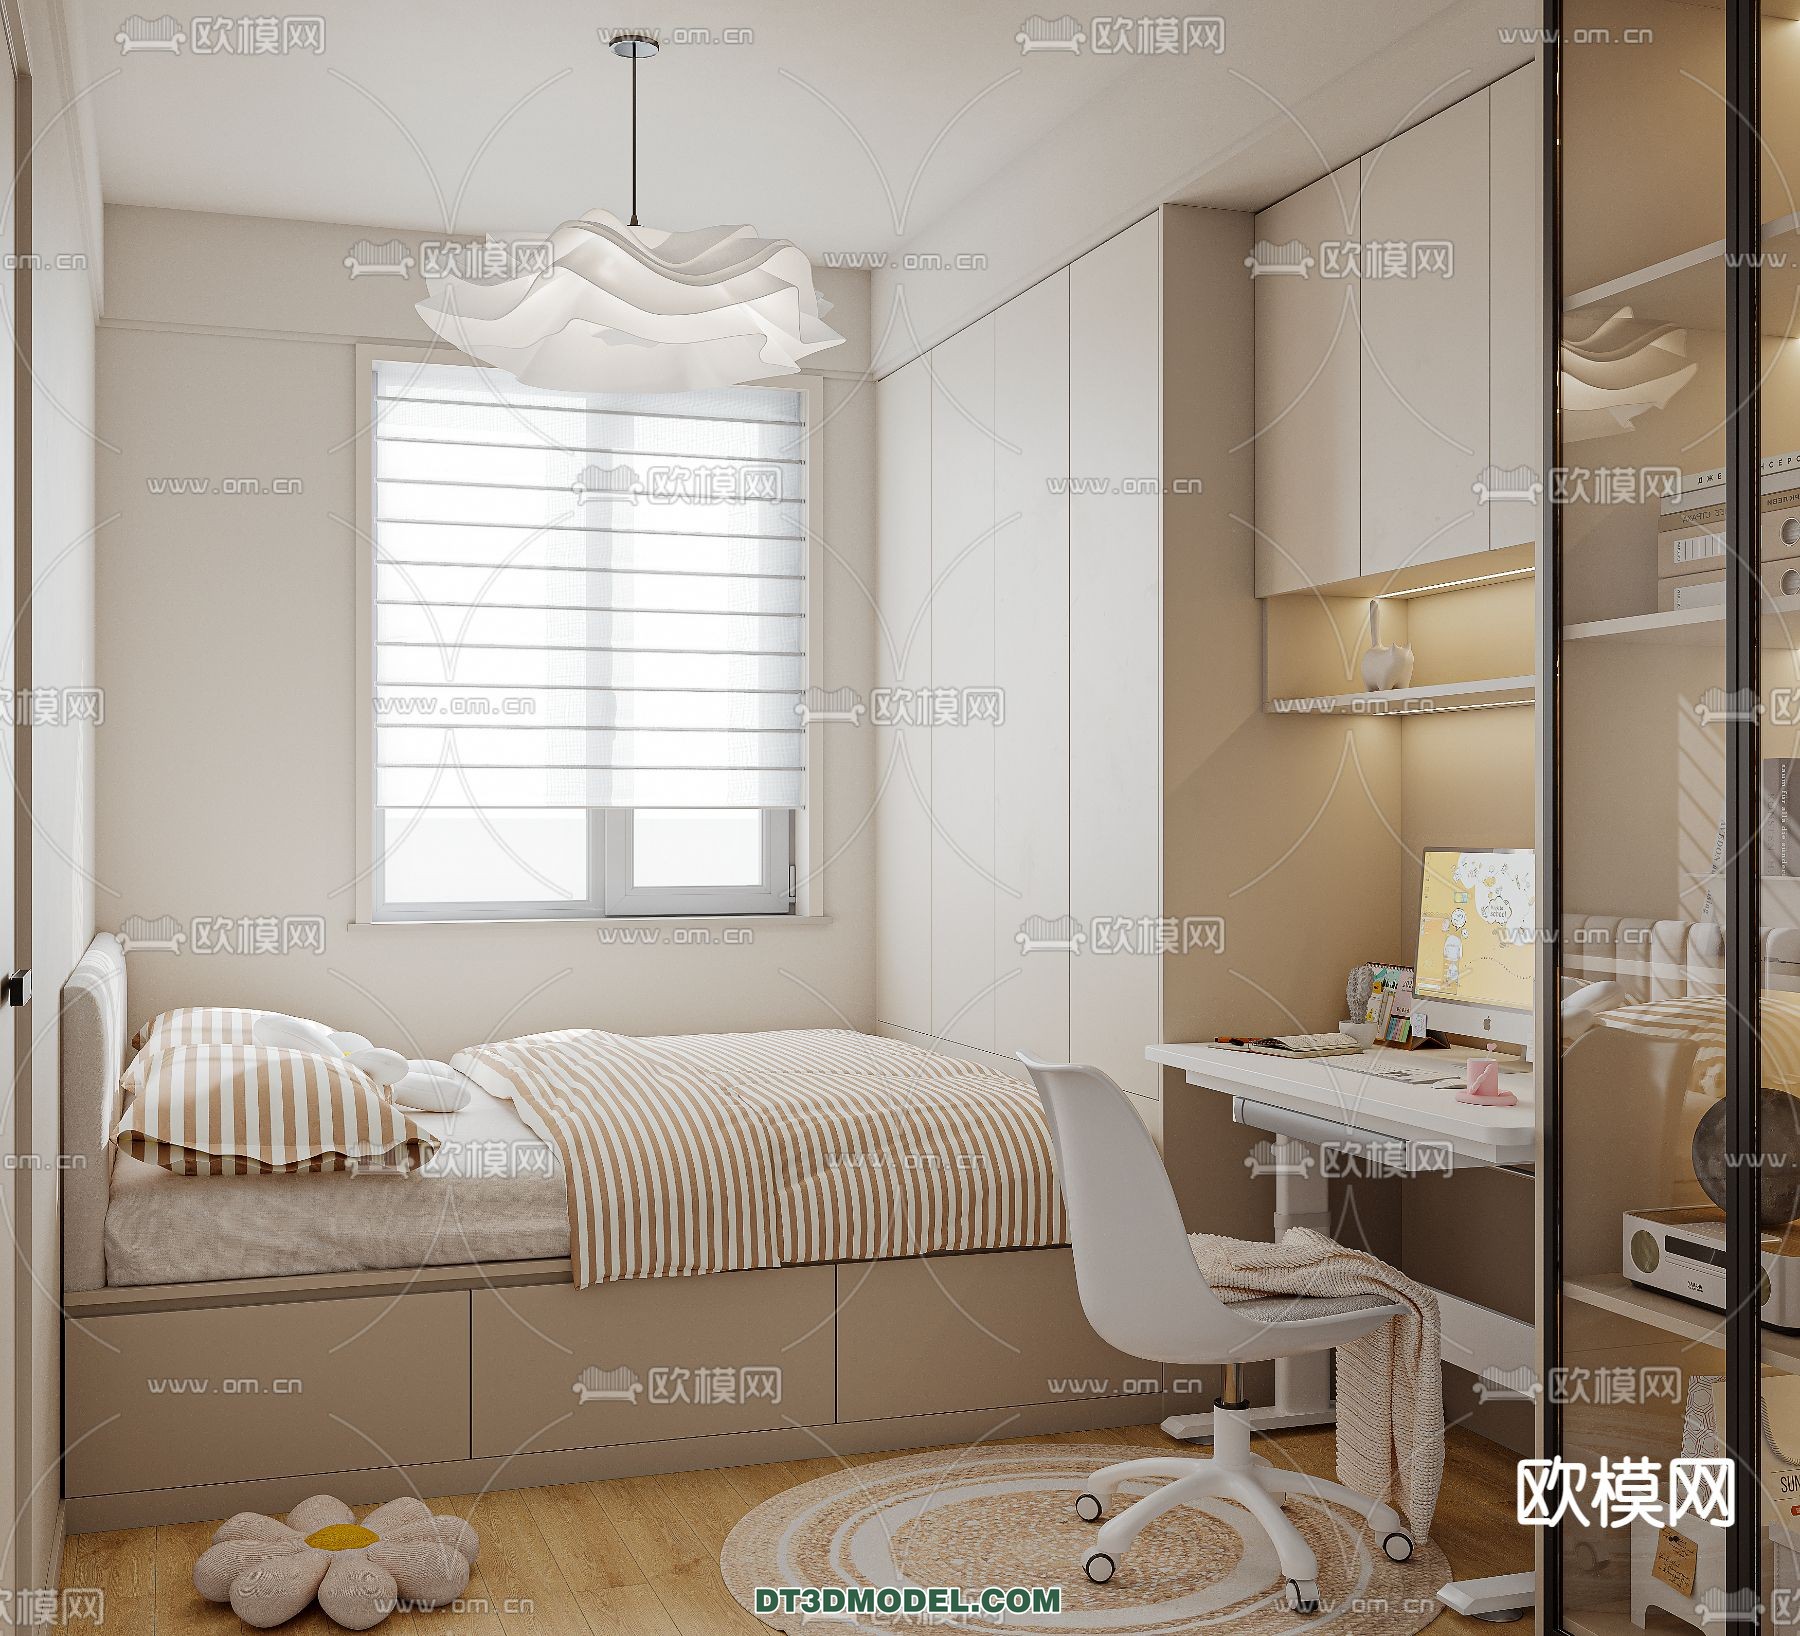 Tatami Bedroom – Japan Bedroom – 3D Scene – 011 - thumbnail 1